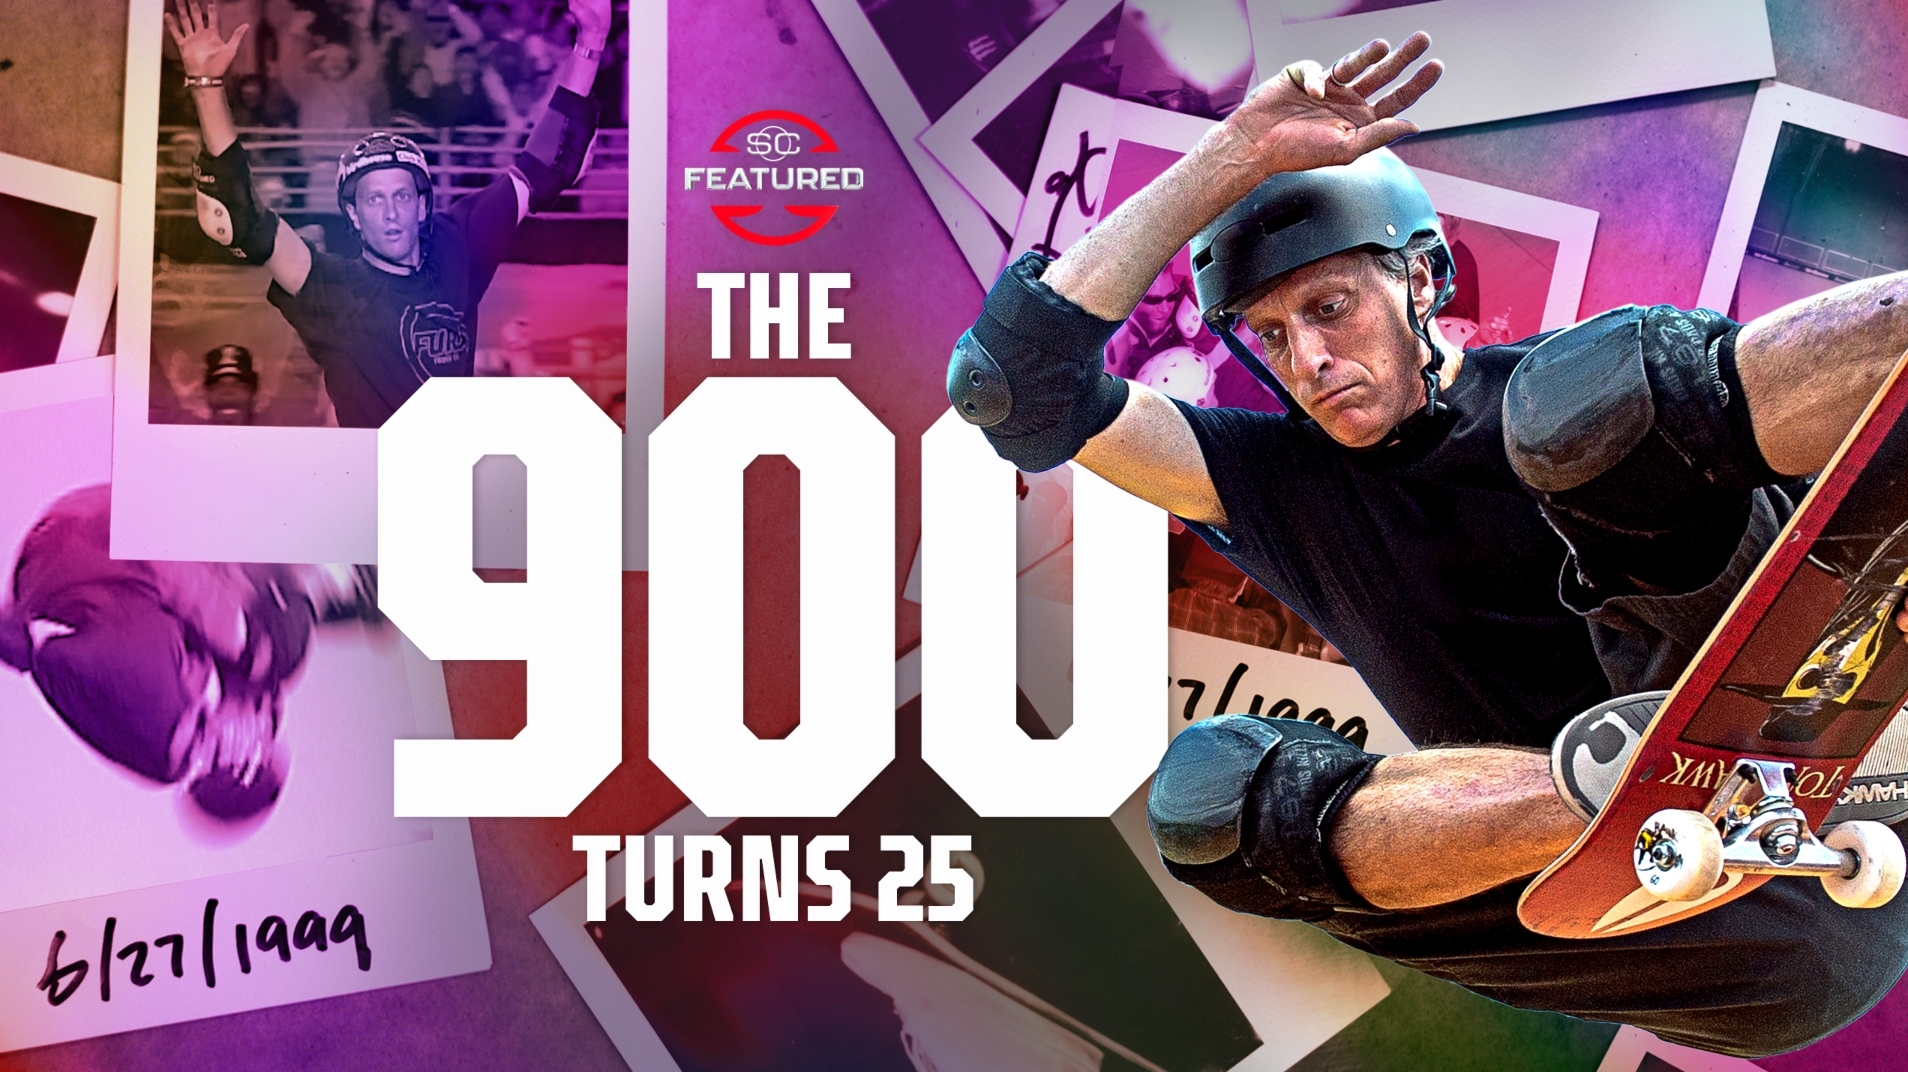 SC Featured: Tony Hawk's 900 turns 25